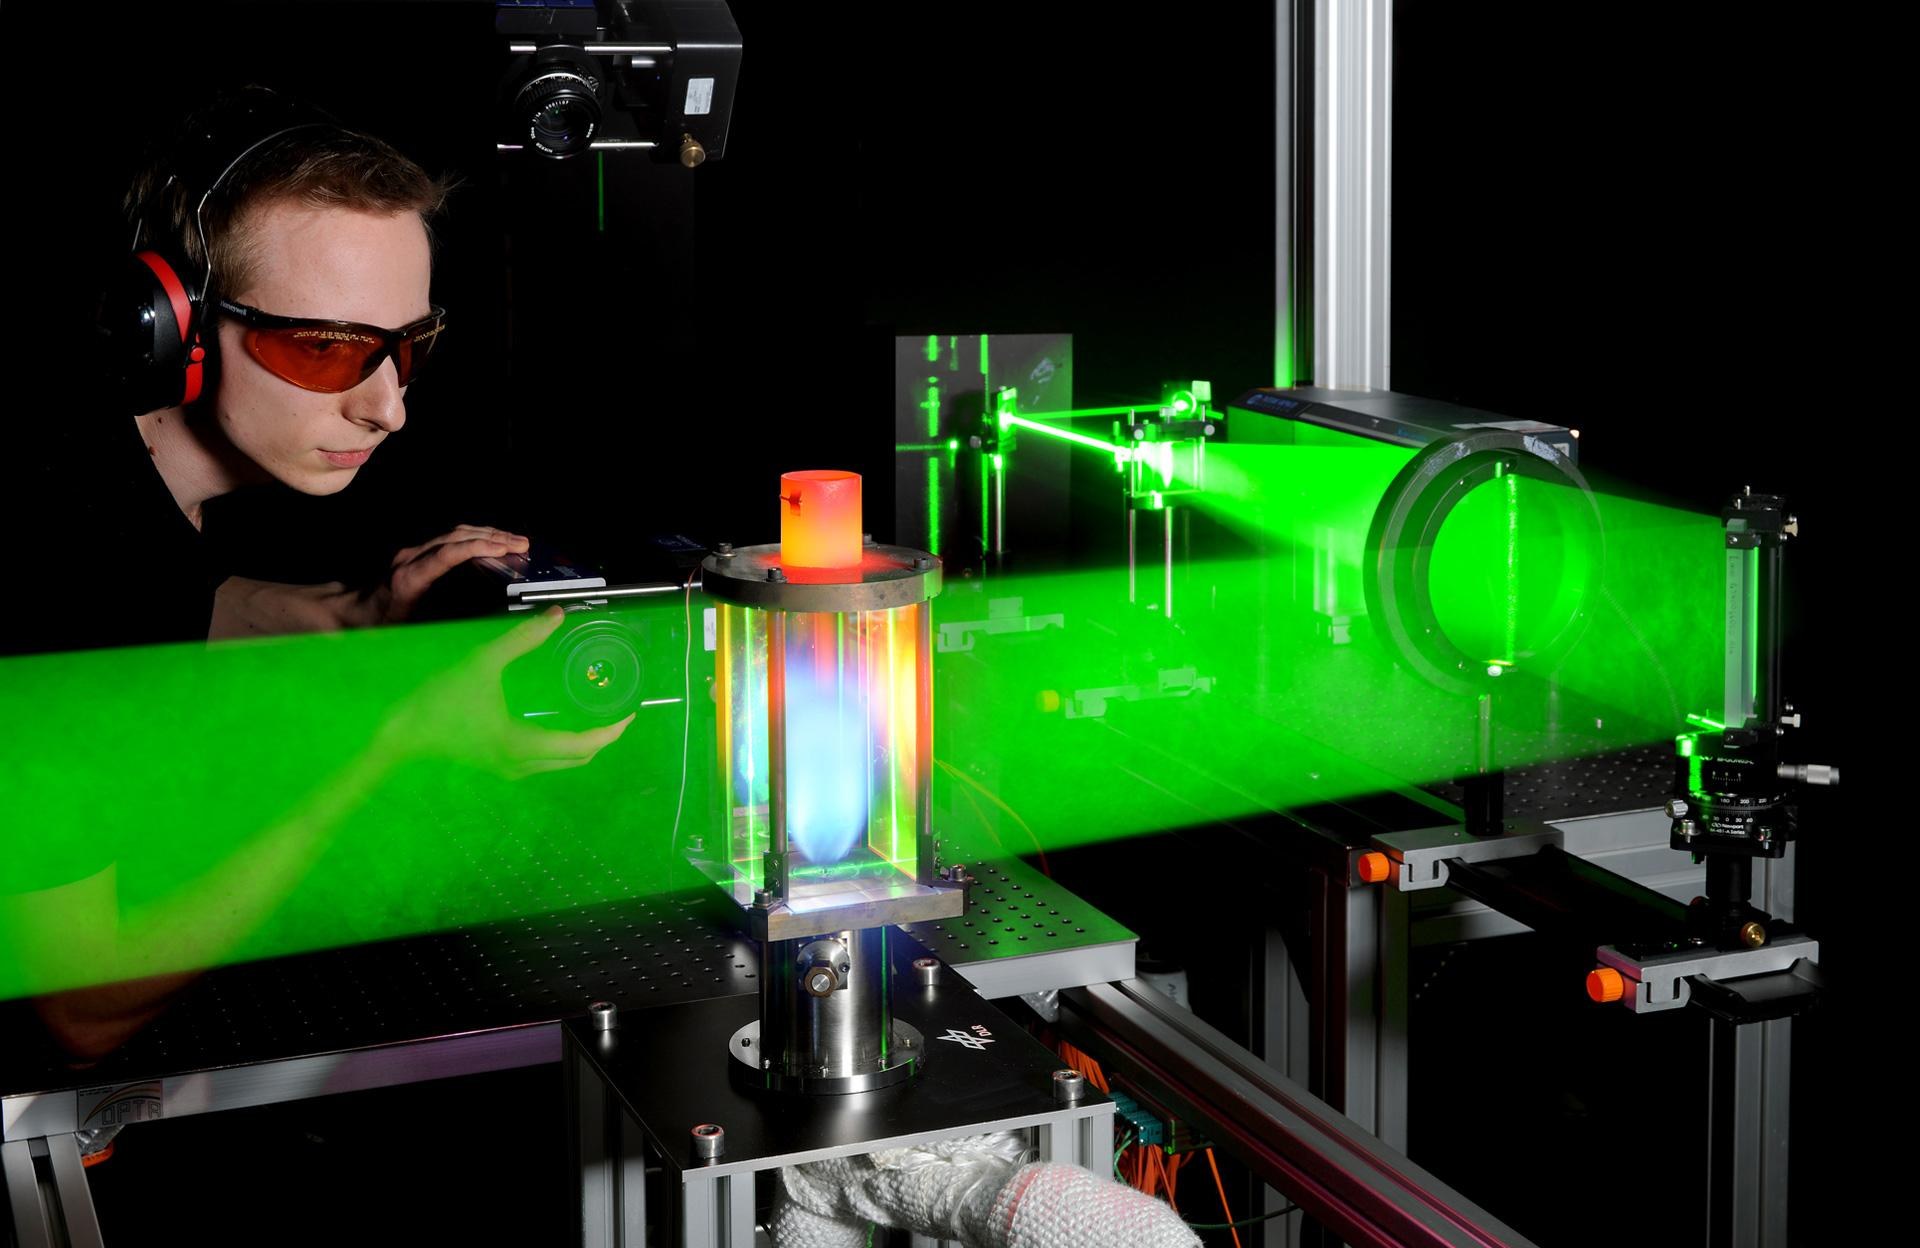 Demonstration laser metrology